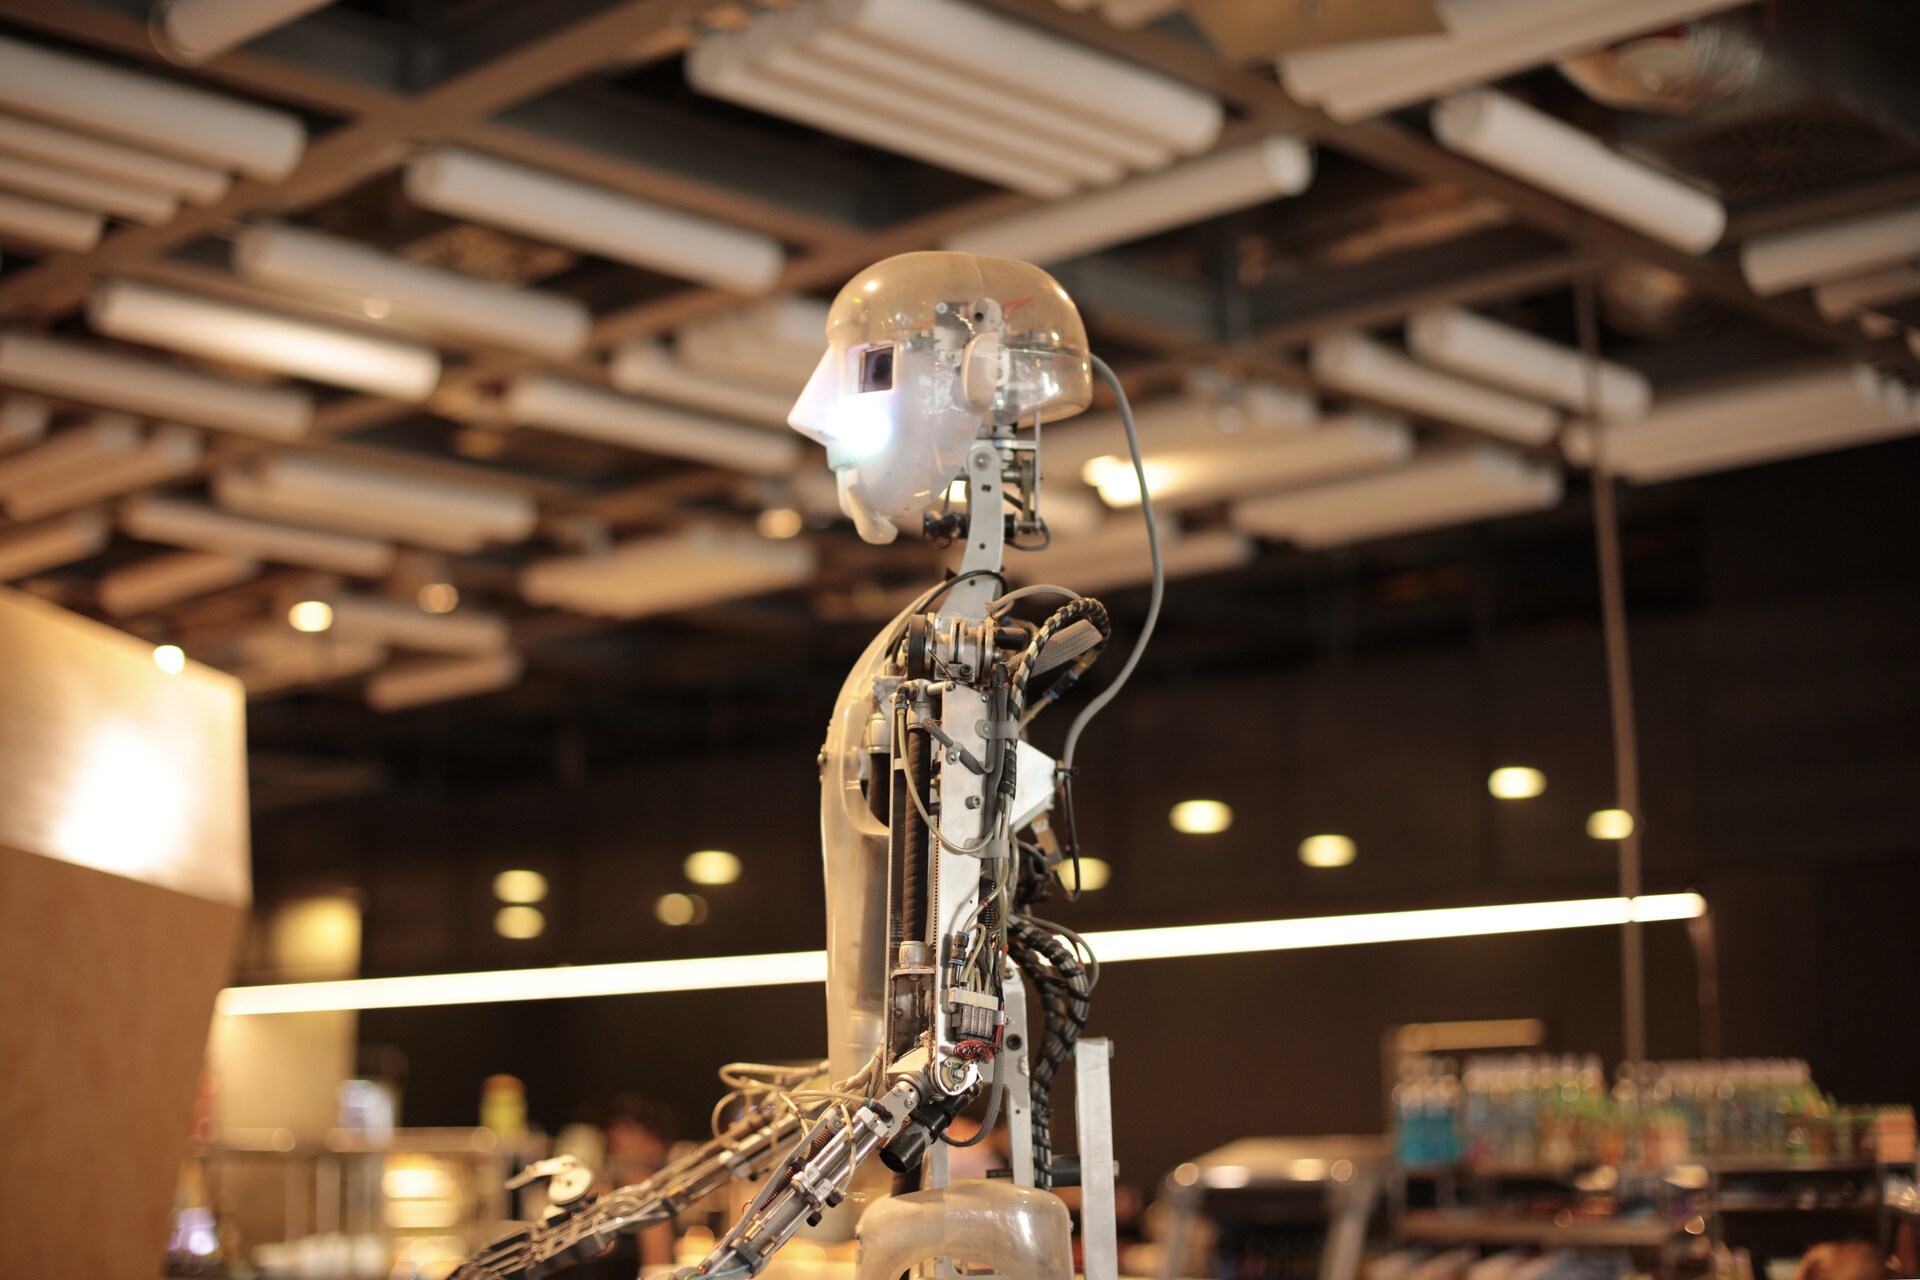 Un robot modern amb trets gairebé humans